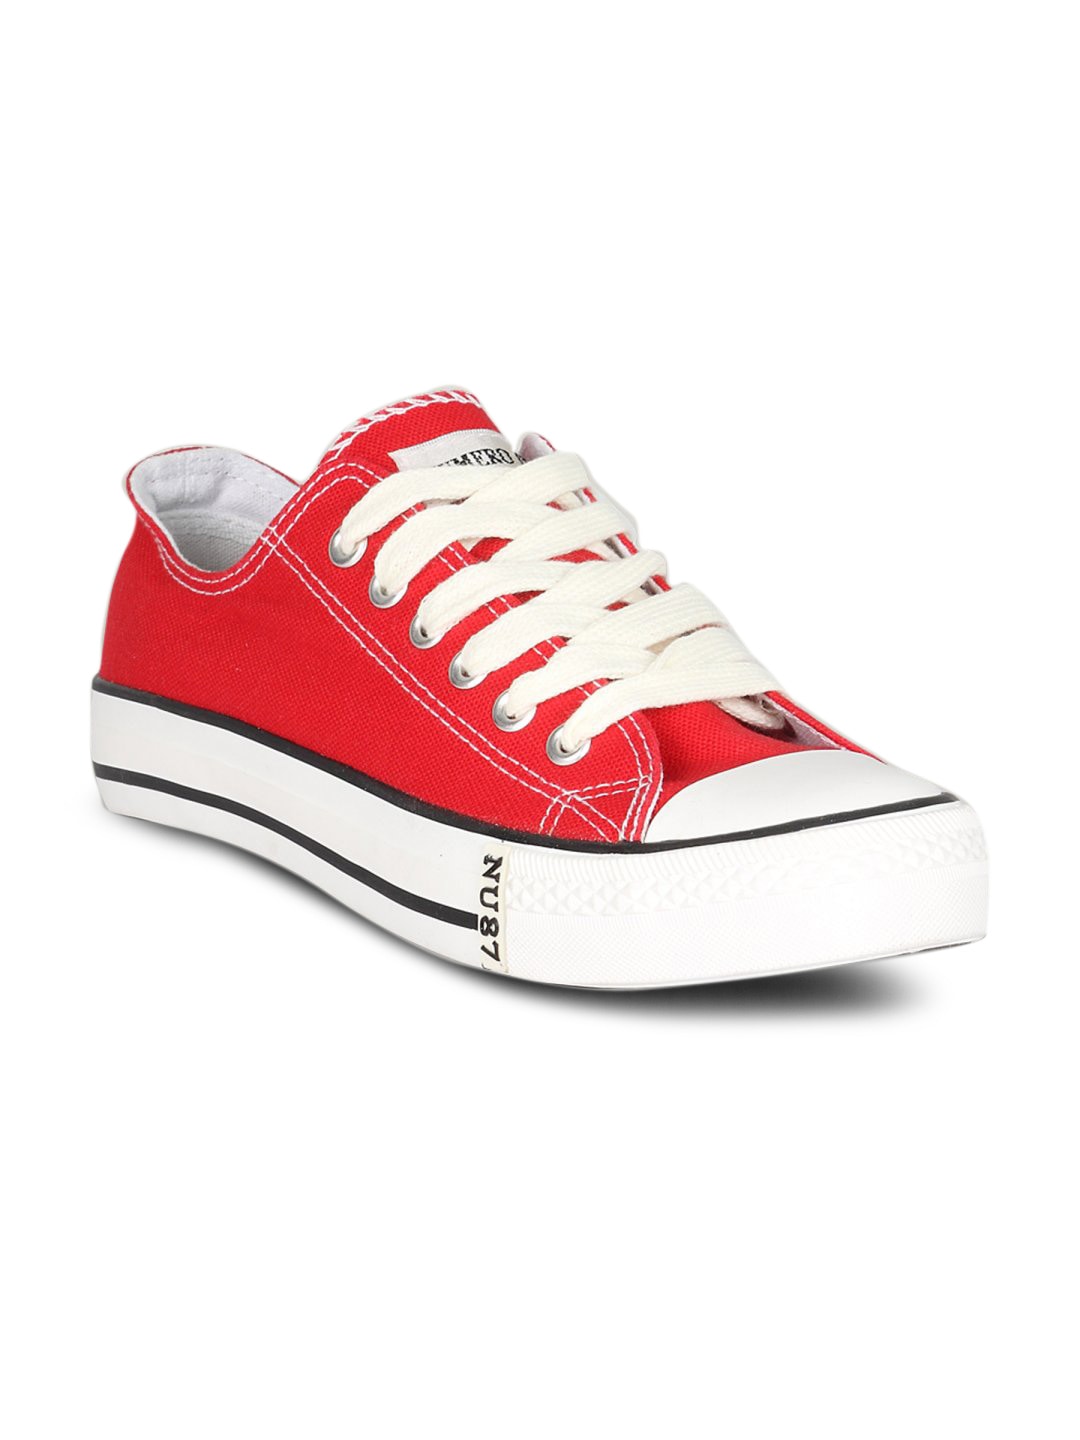 Numero Uno Men's Canvas Red Shoe